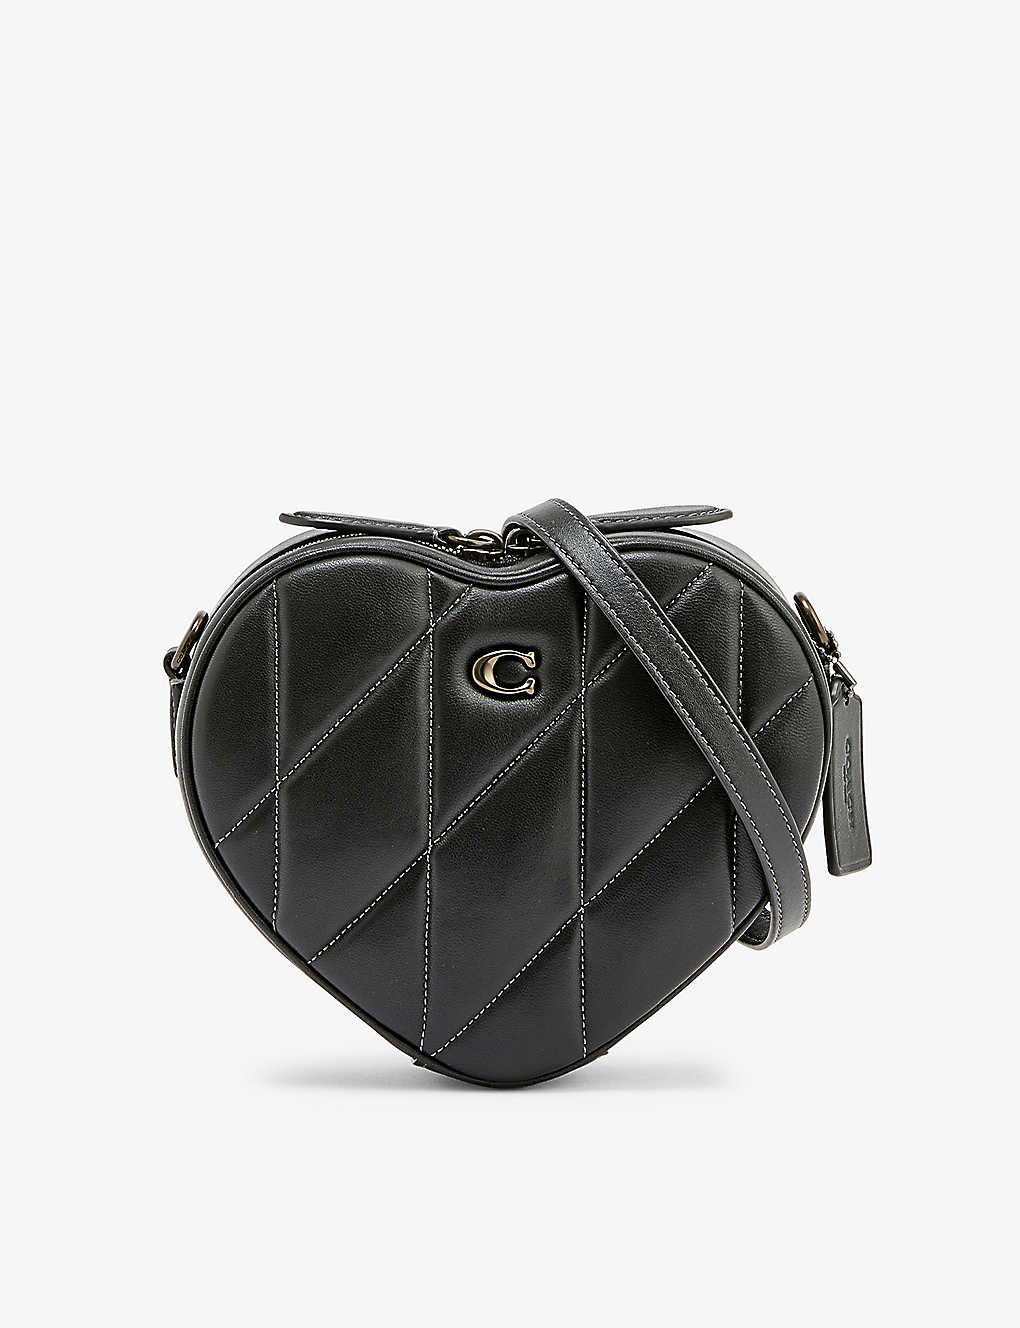 Shop Coach Women's V5/black Heart-shaped Leather Cross-body Bag